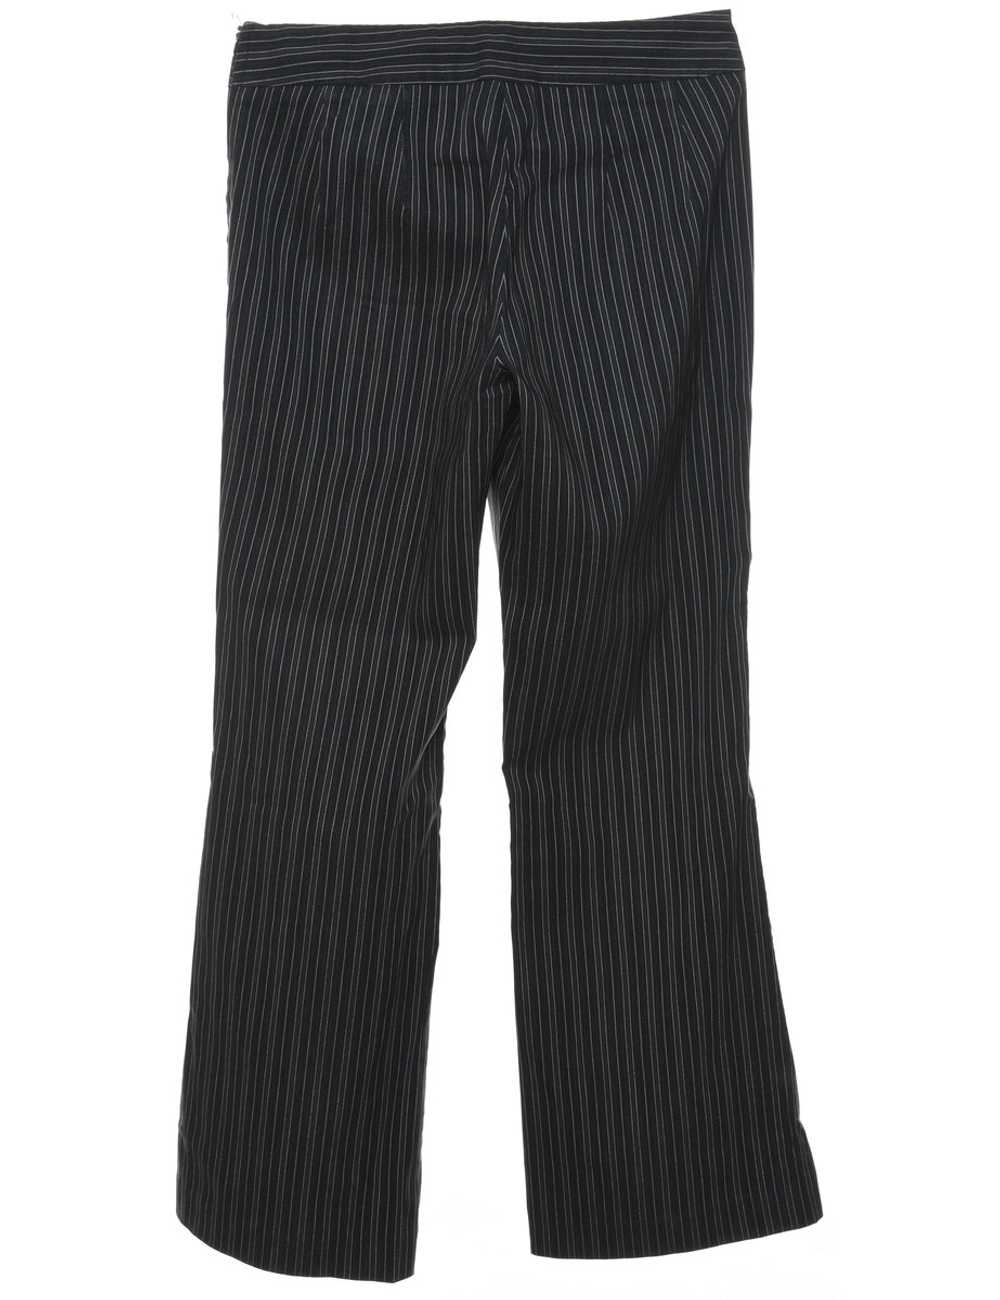 Pinstripes Black Trousers - W30 L29 - image 2